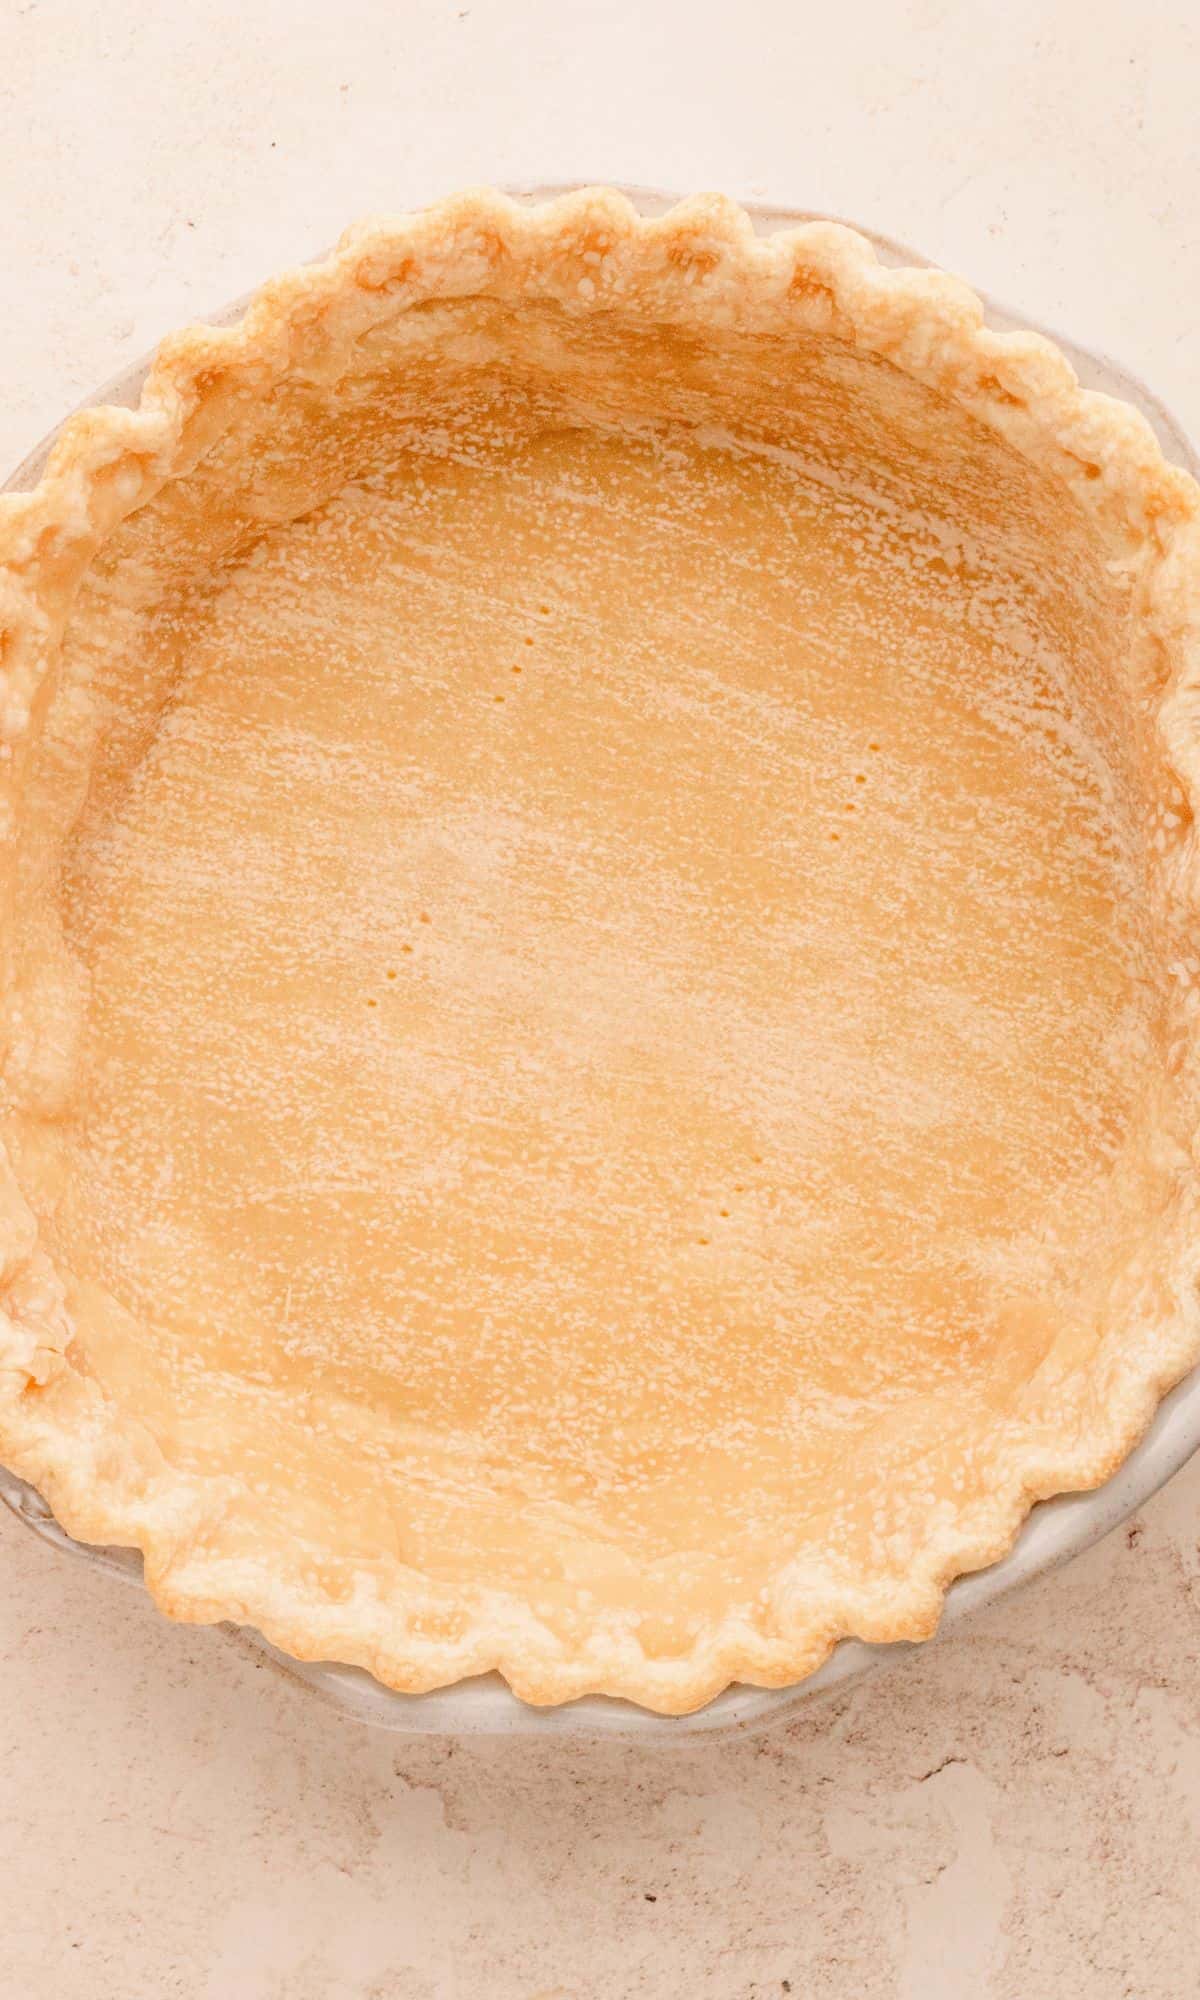 An empty baked pie crust.